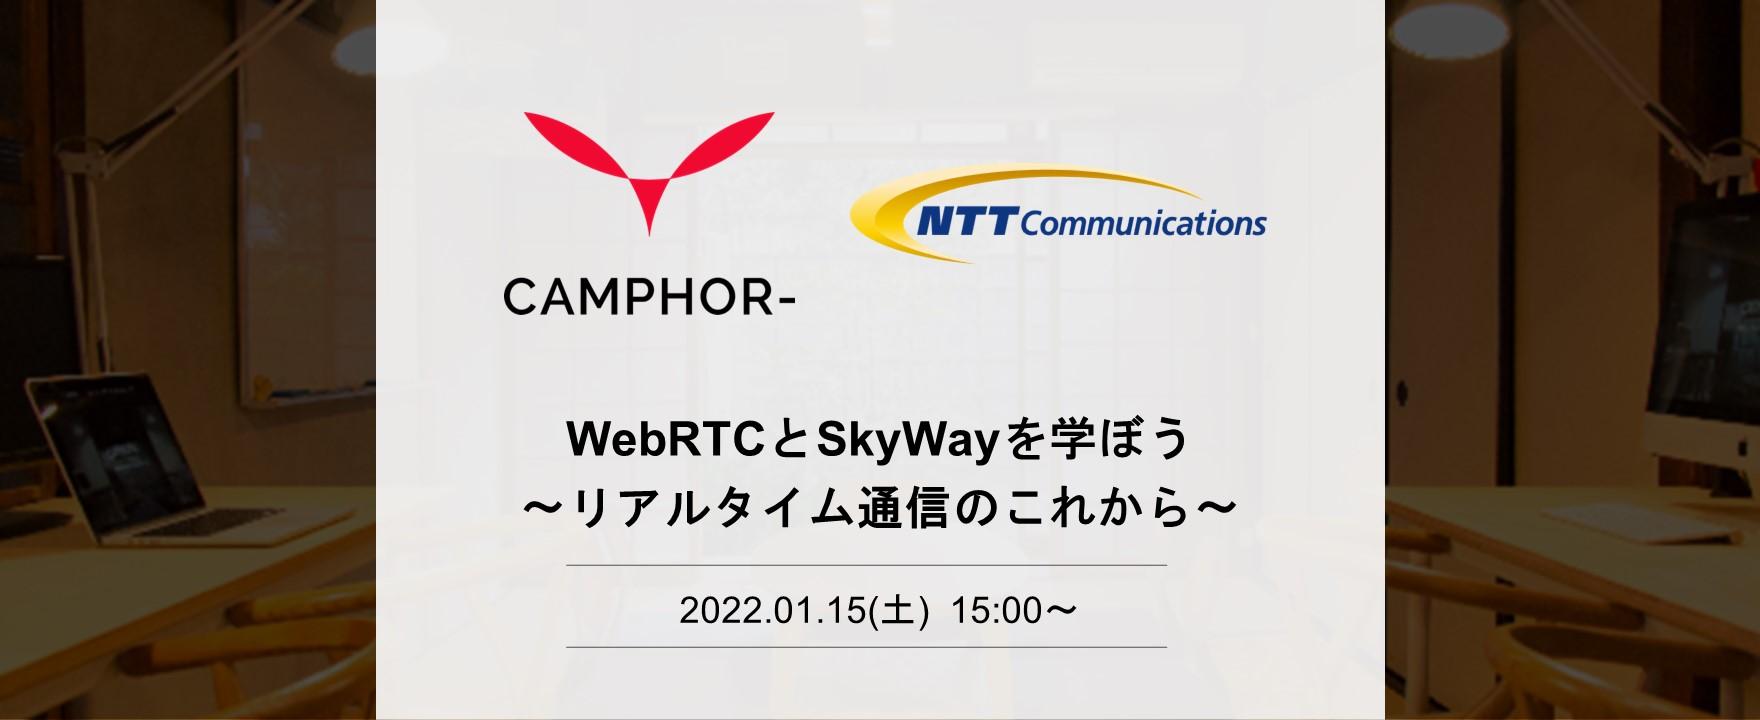 【NTTコミュニケーションズ】WebRTCとSkyWayを学ぼう 〜リアルタイム通信のこれから〜